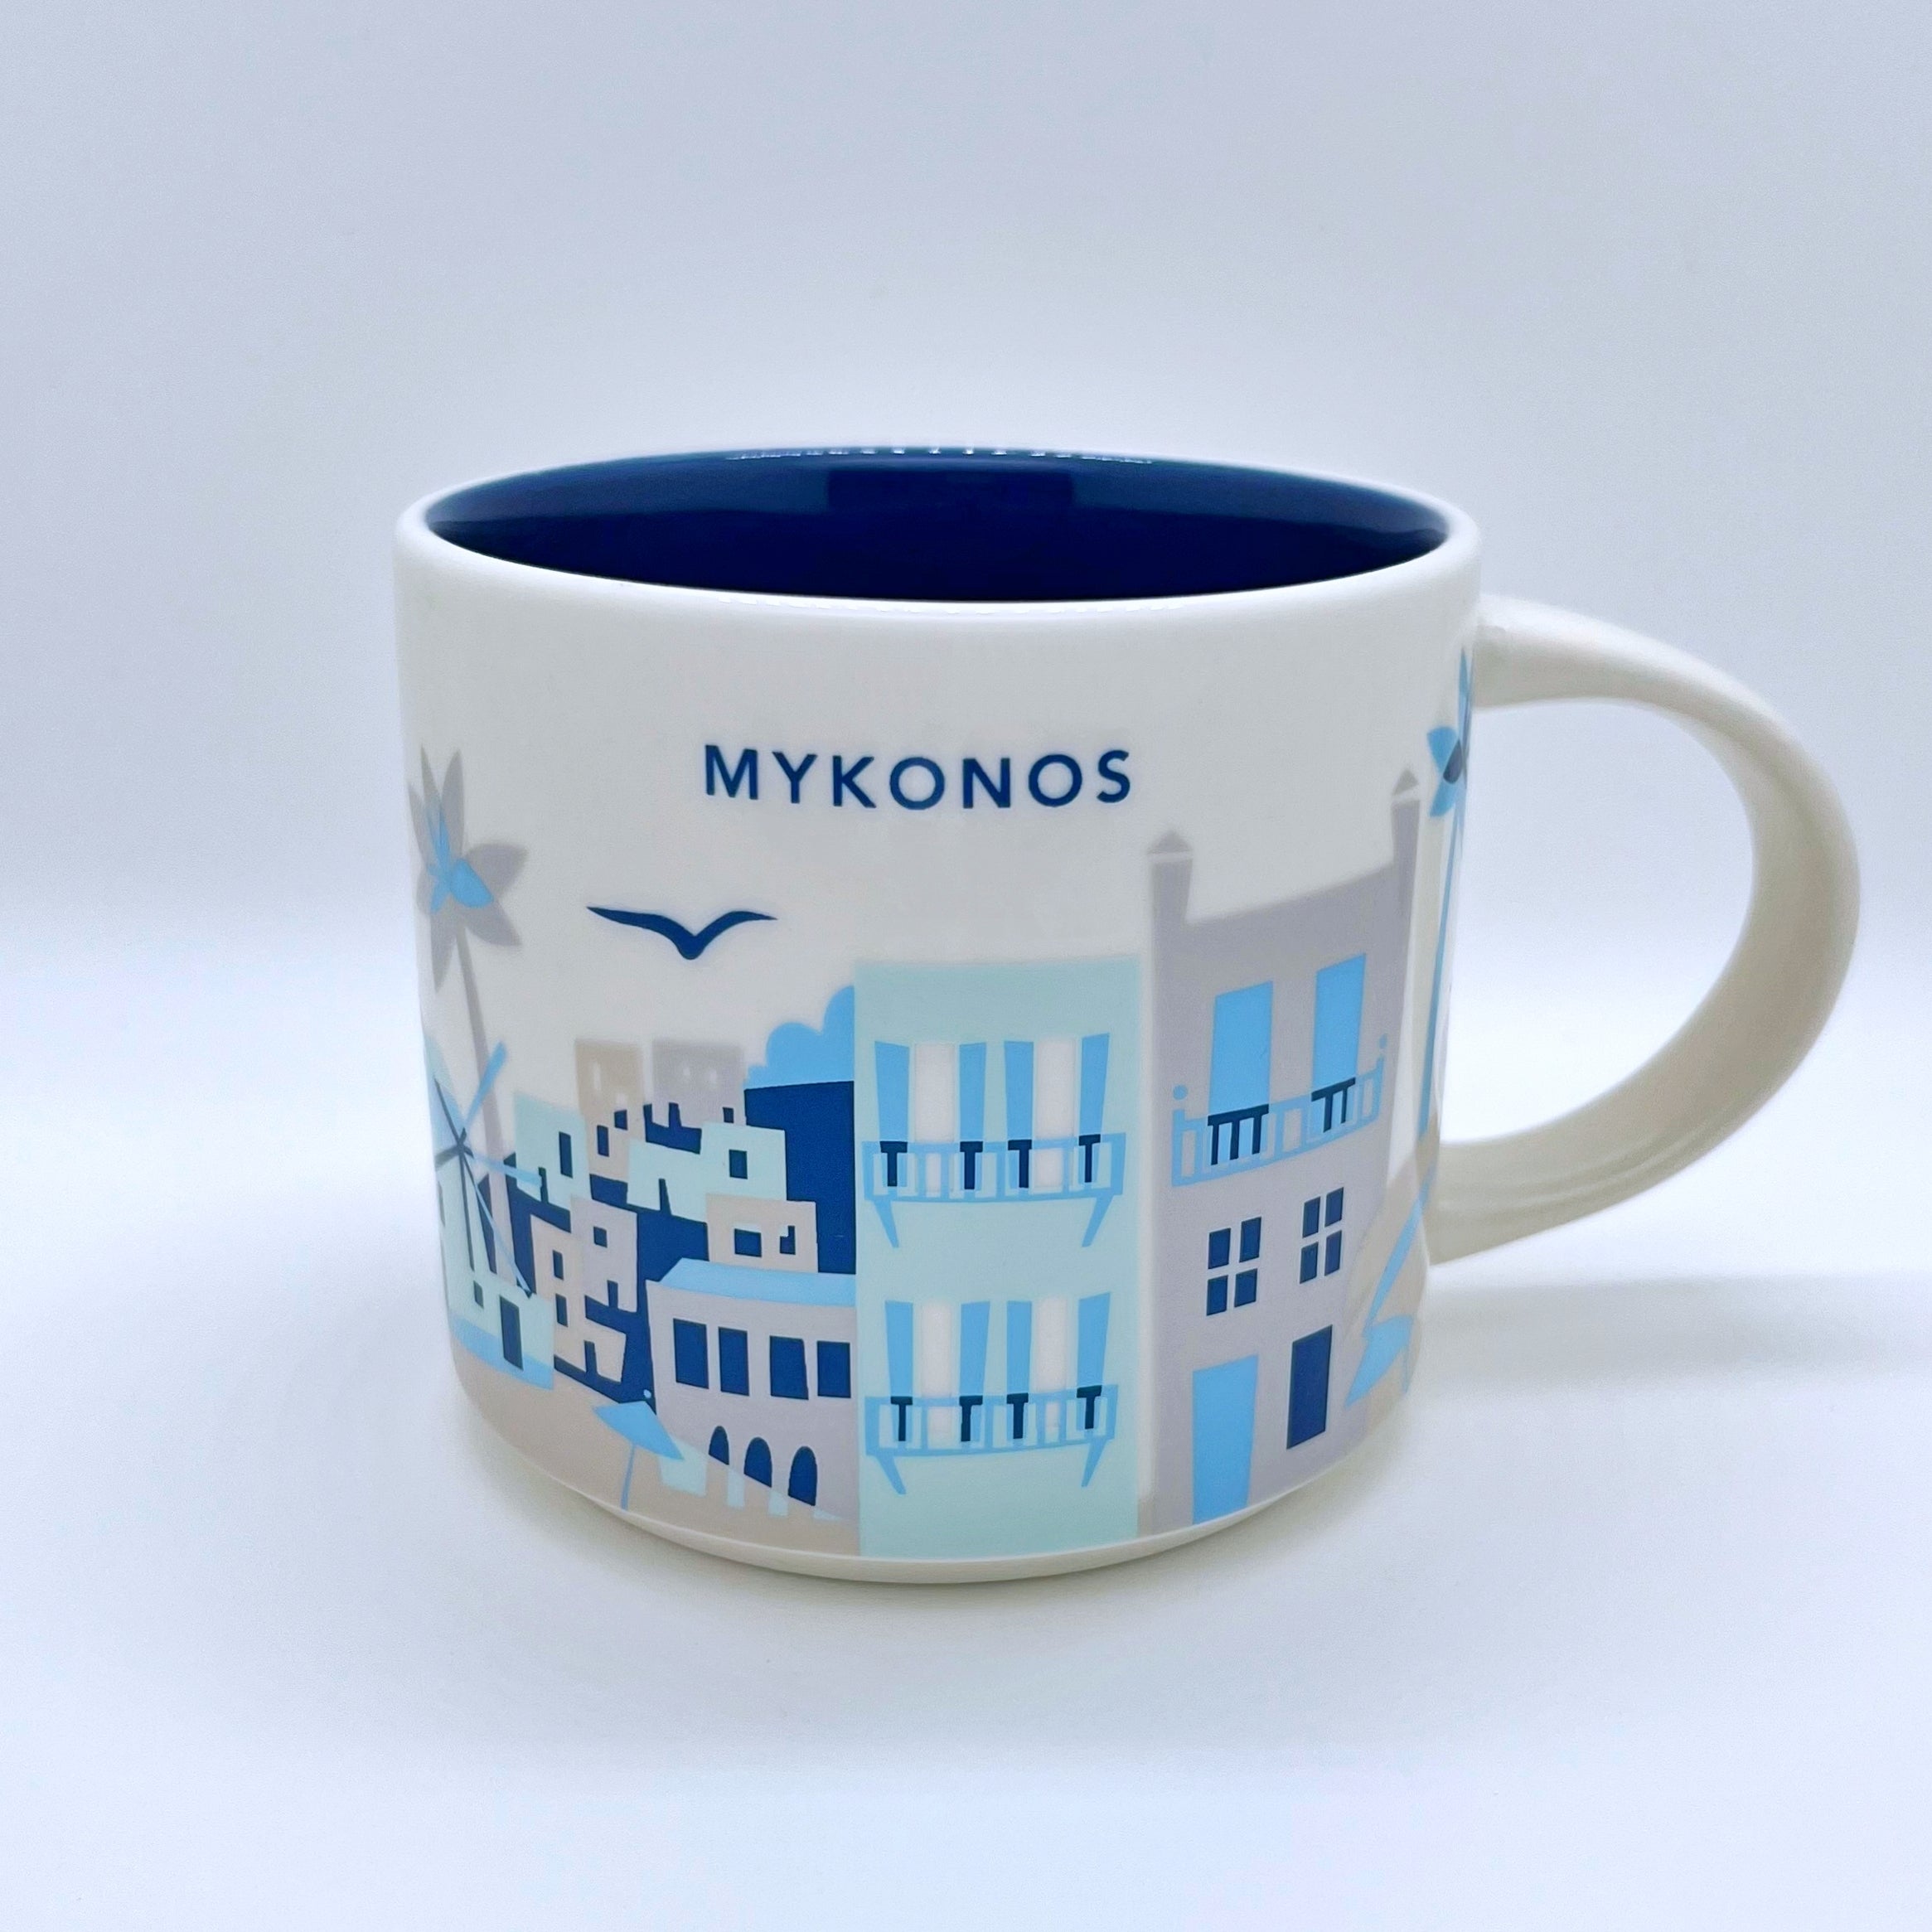 Mykonos City Kaffee Tasse